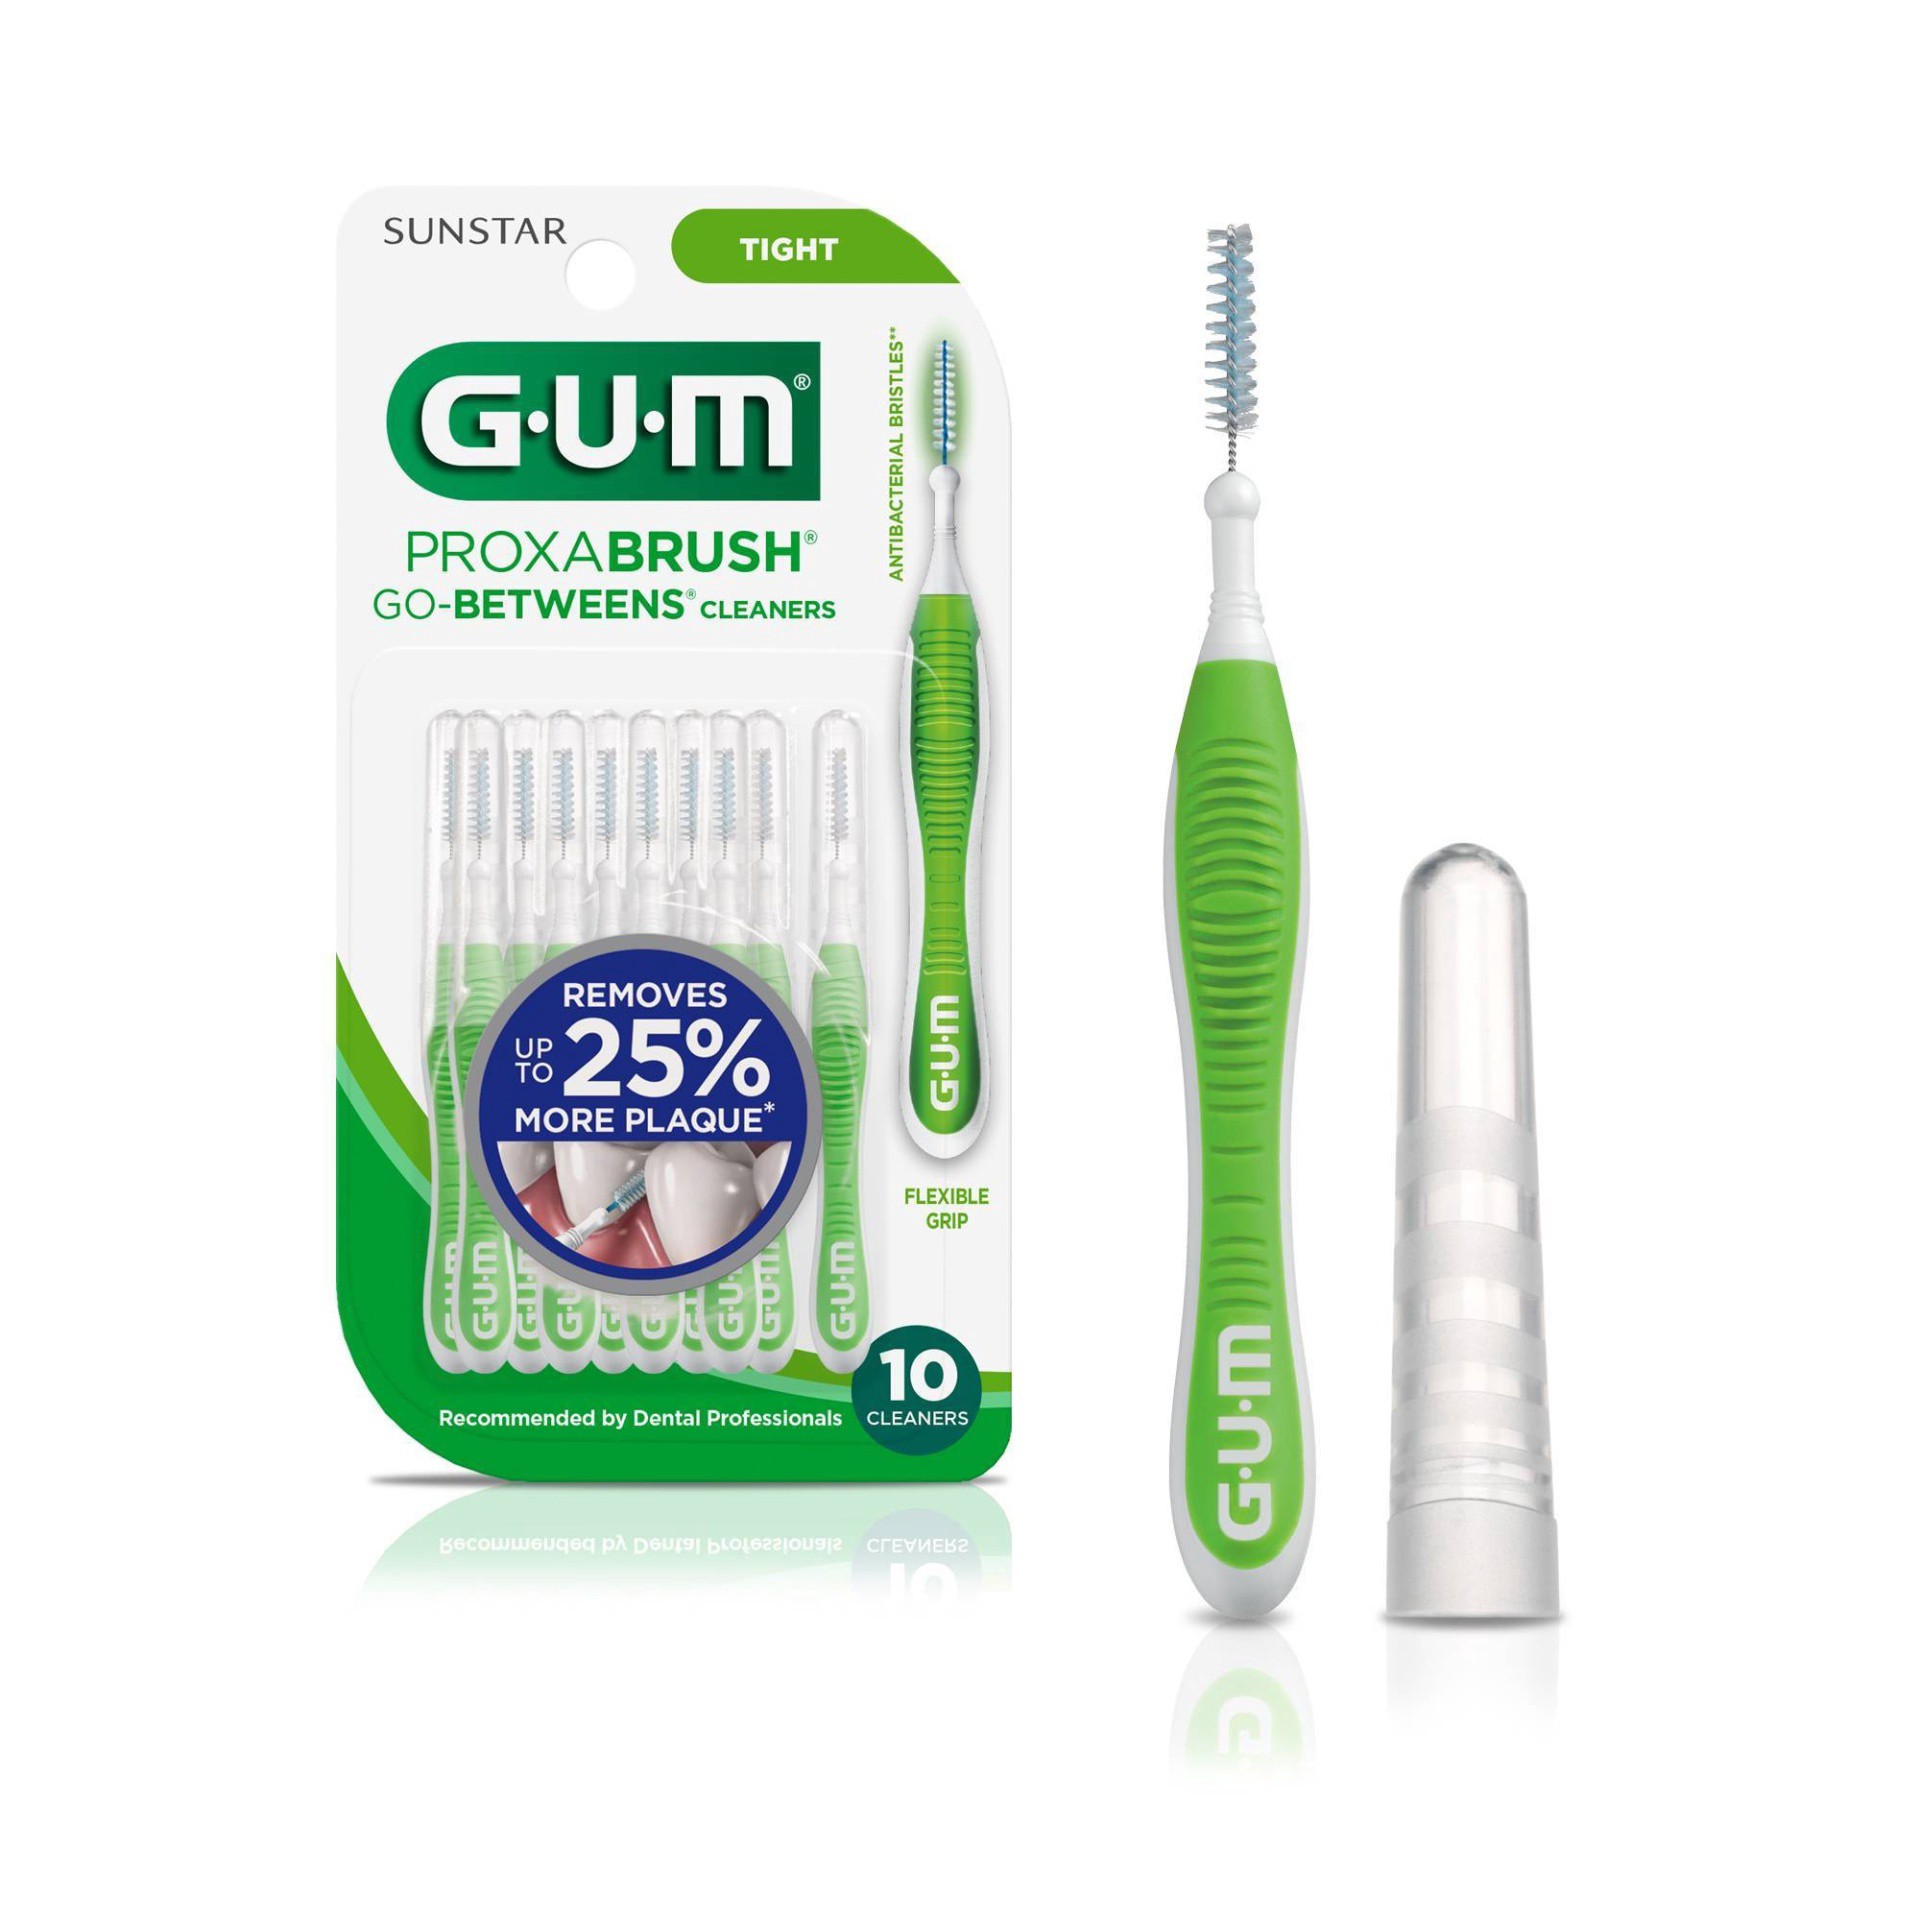 slide 1 of 1, G-U-M SUNSTAR GUM Proxabrush Go-Betweens Tight Cleaners, 8 ct